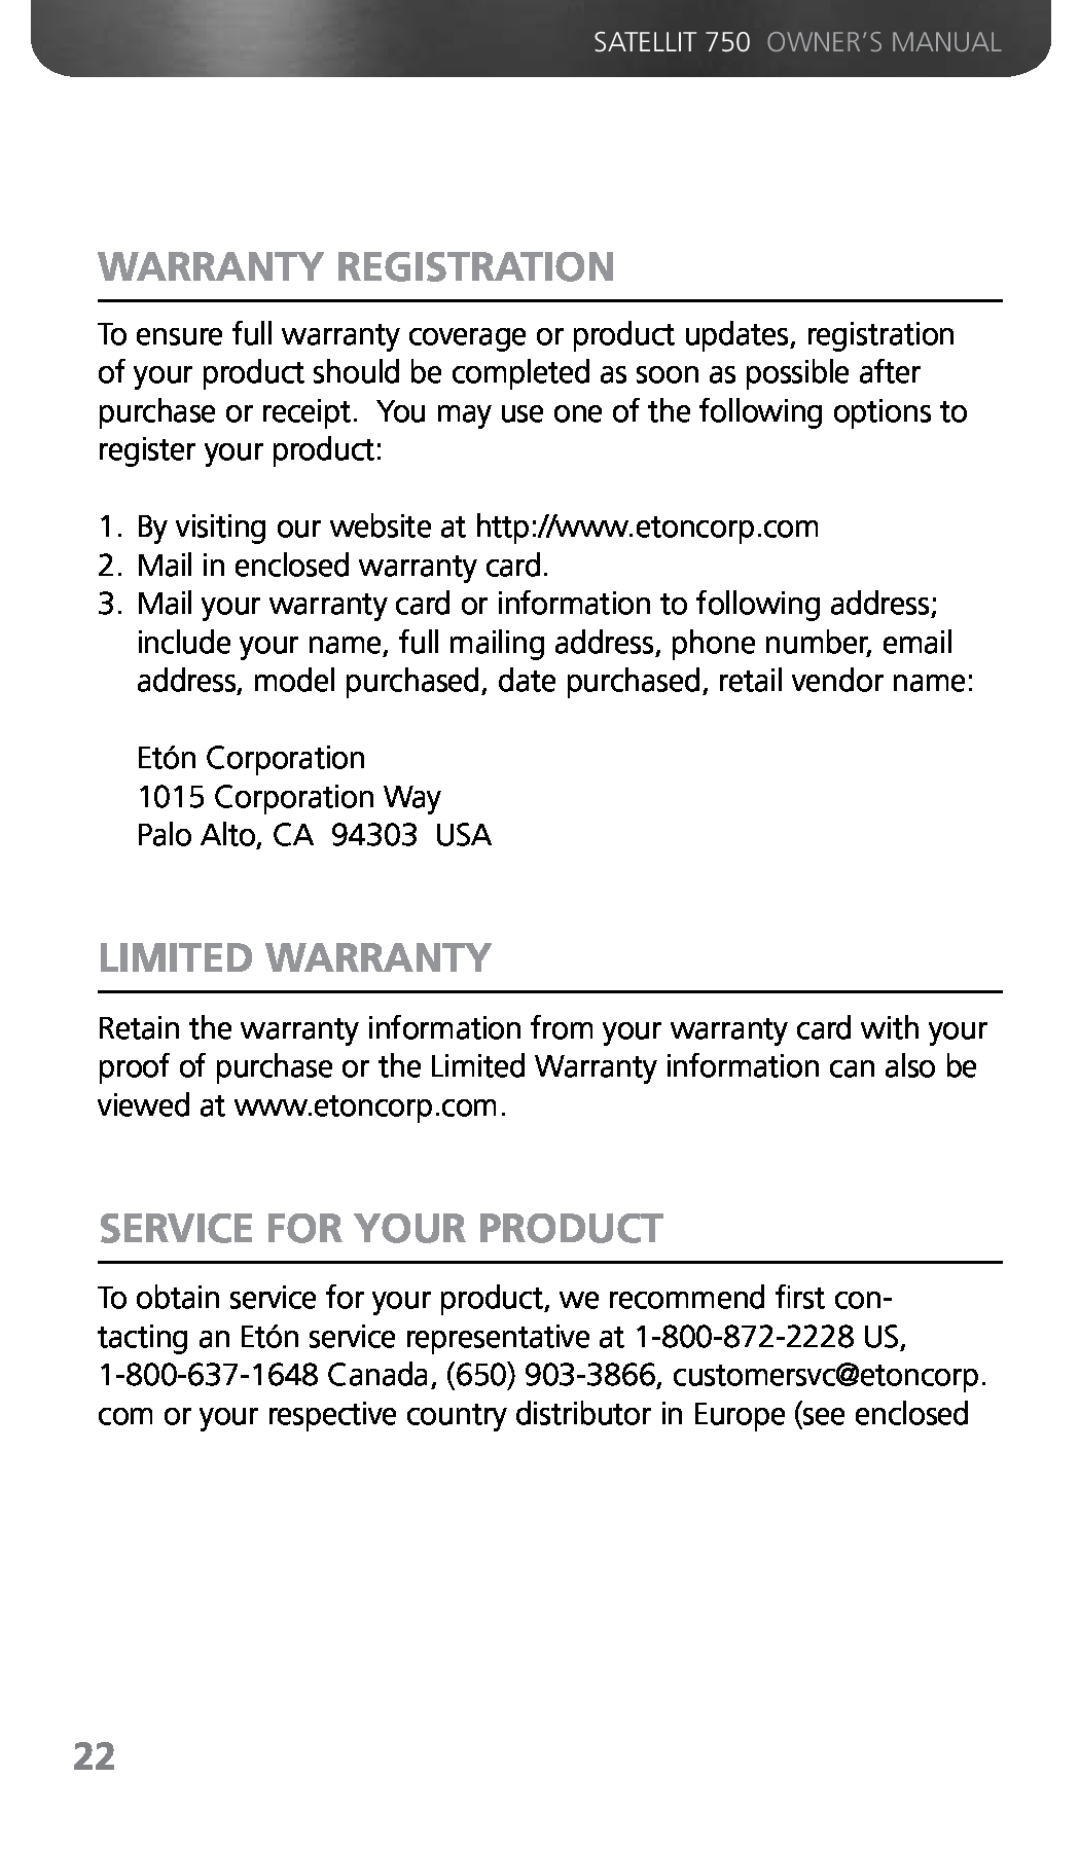 Grundig 750 owner manual Warranty Registration, Limited Warranty, Service For Your Product 